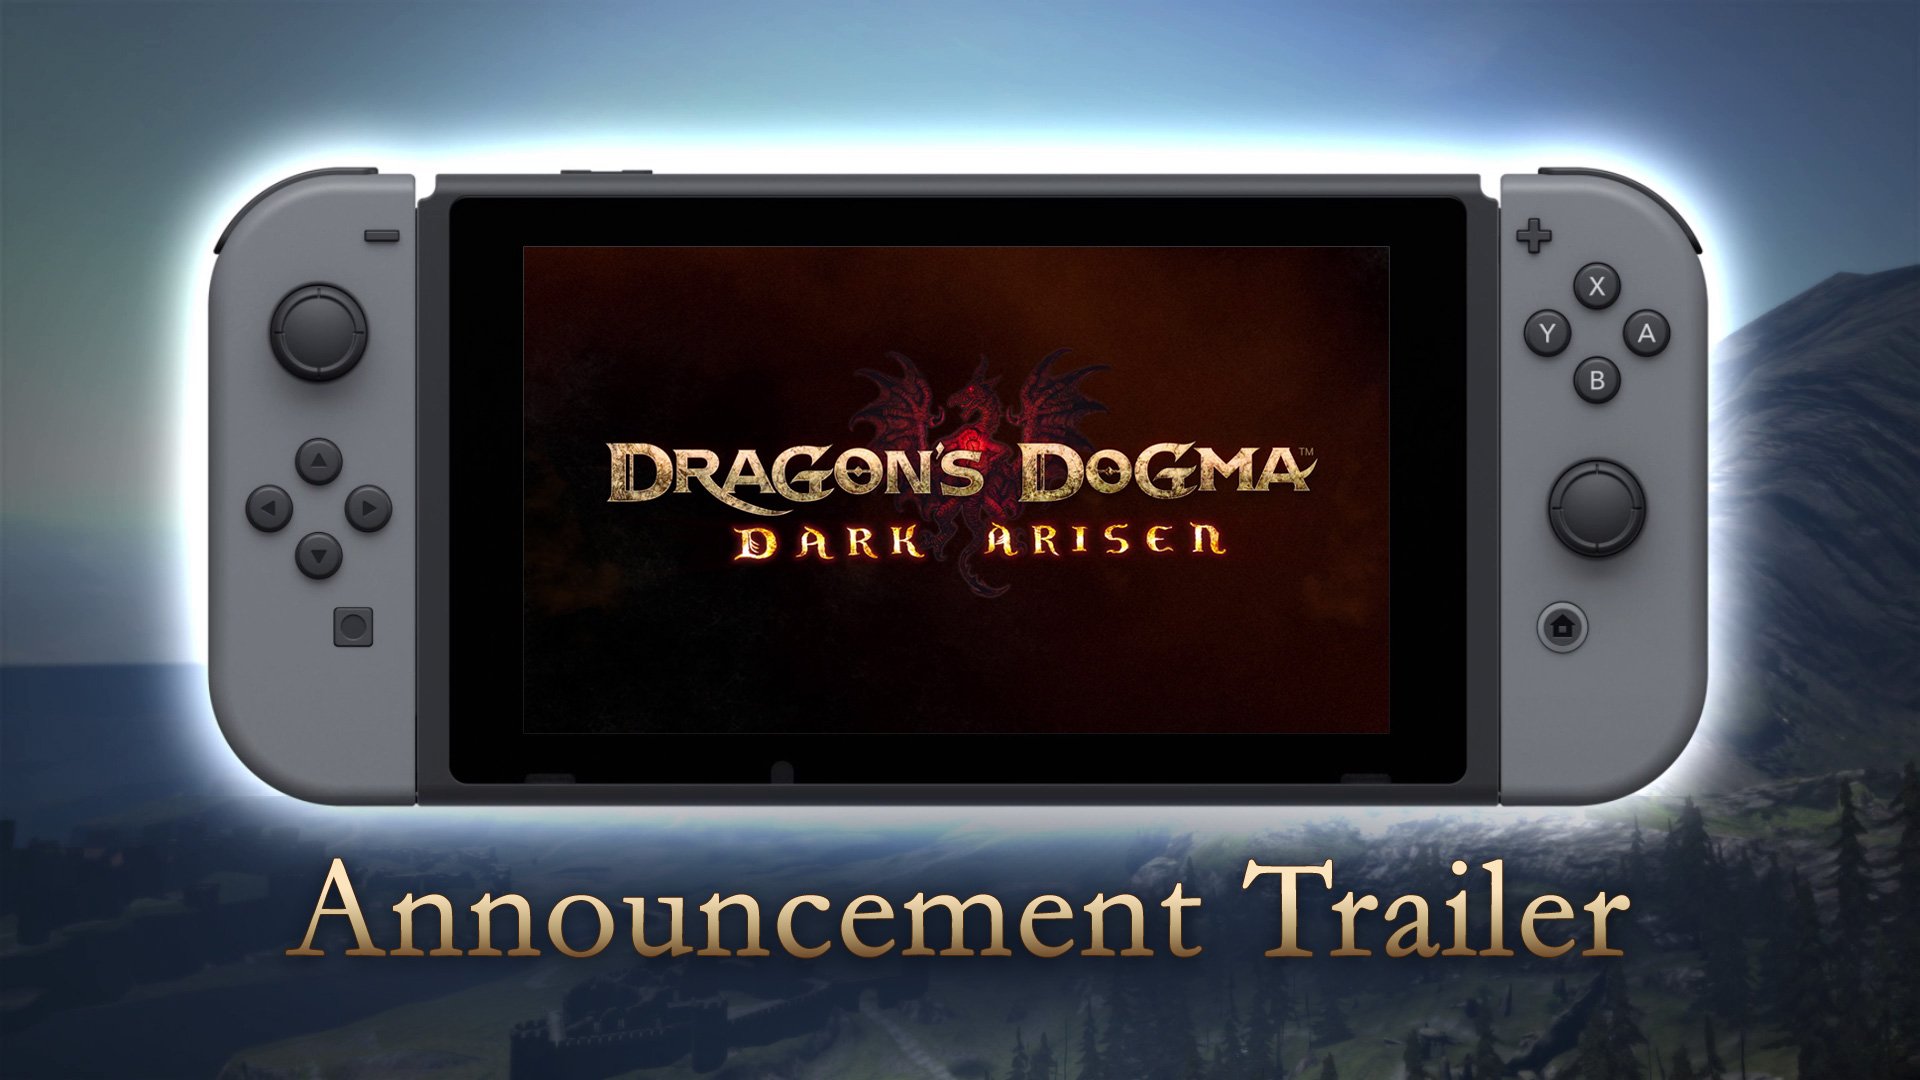 Dragon's Dogma: Dark Arisen - Nintendo Switch